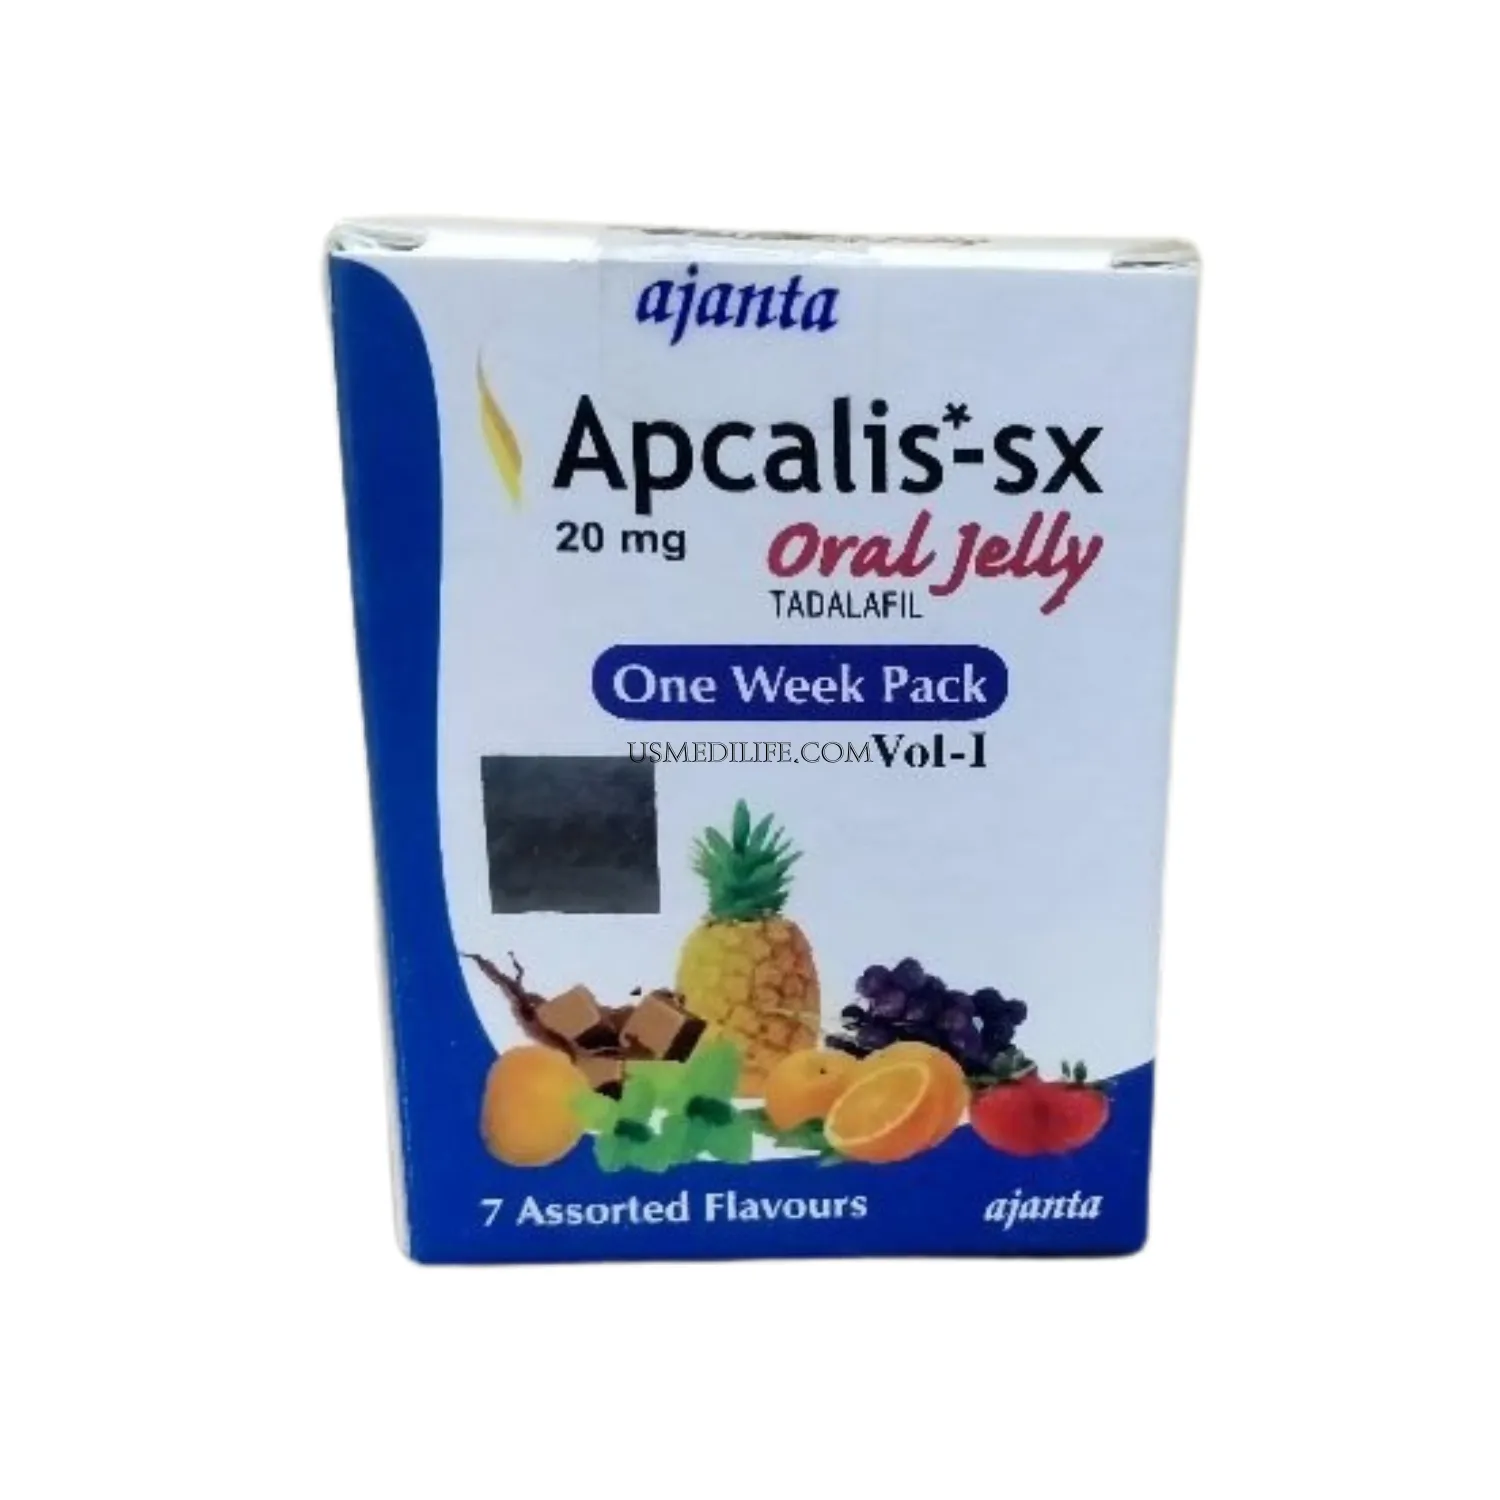  Apcalis Oral Jelly 20mg Image